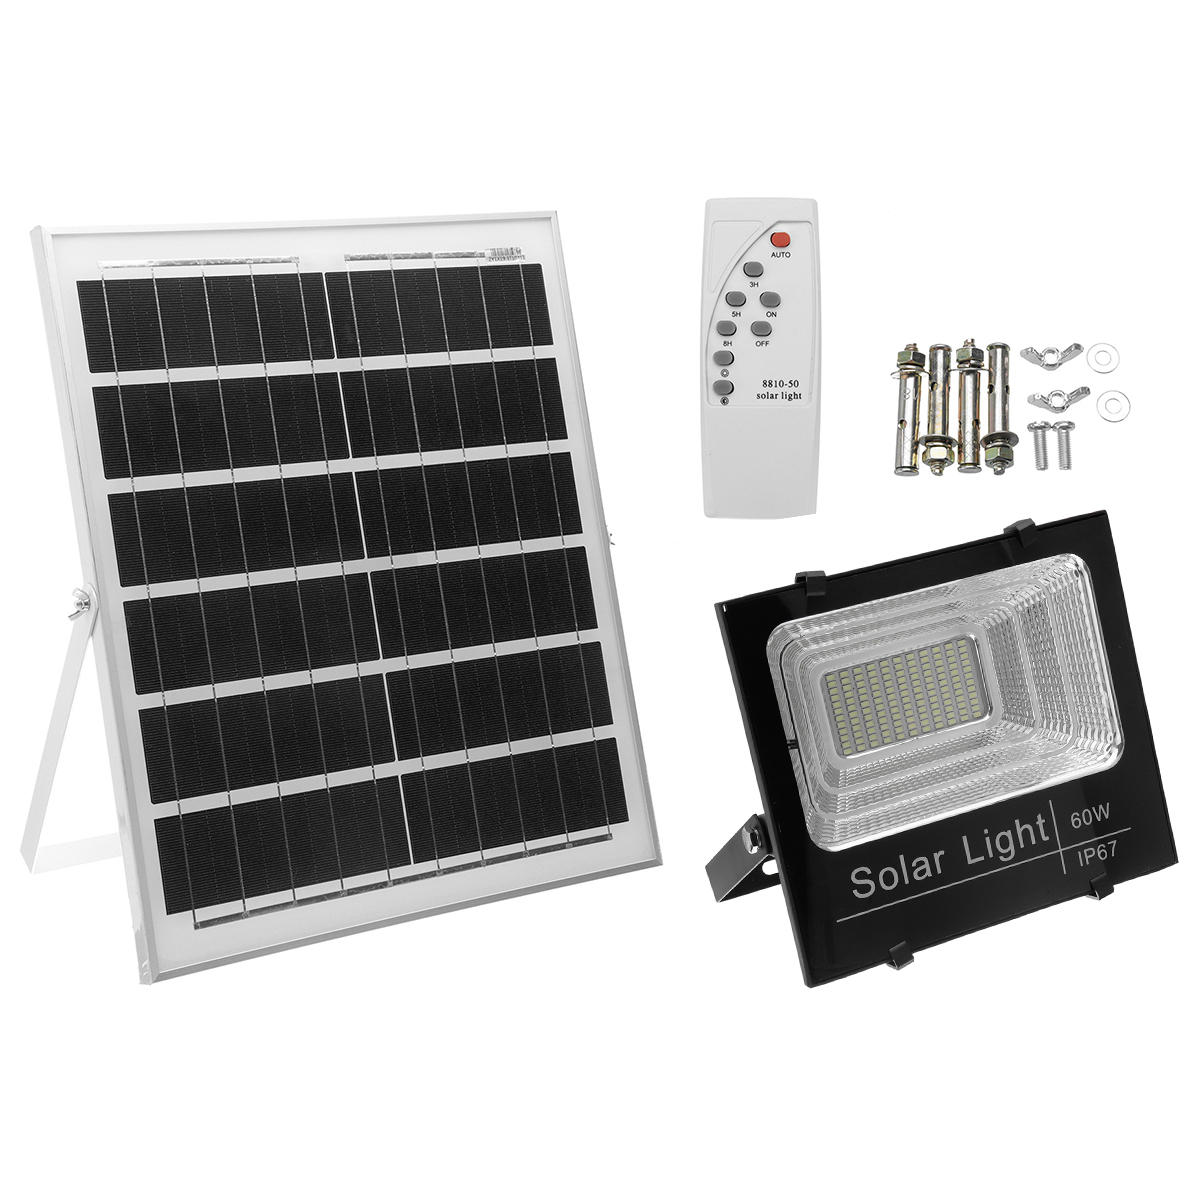 Image of 25w/40w/60w Solar Flood Light Solar LED Spotlight W/ Manual/Remote Control Solar Panel IP67 Waterproof